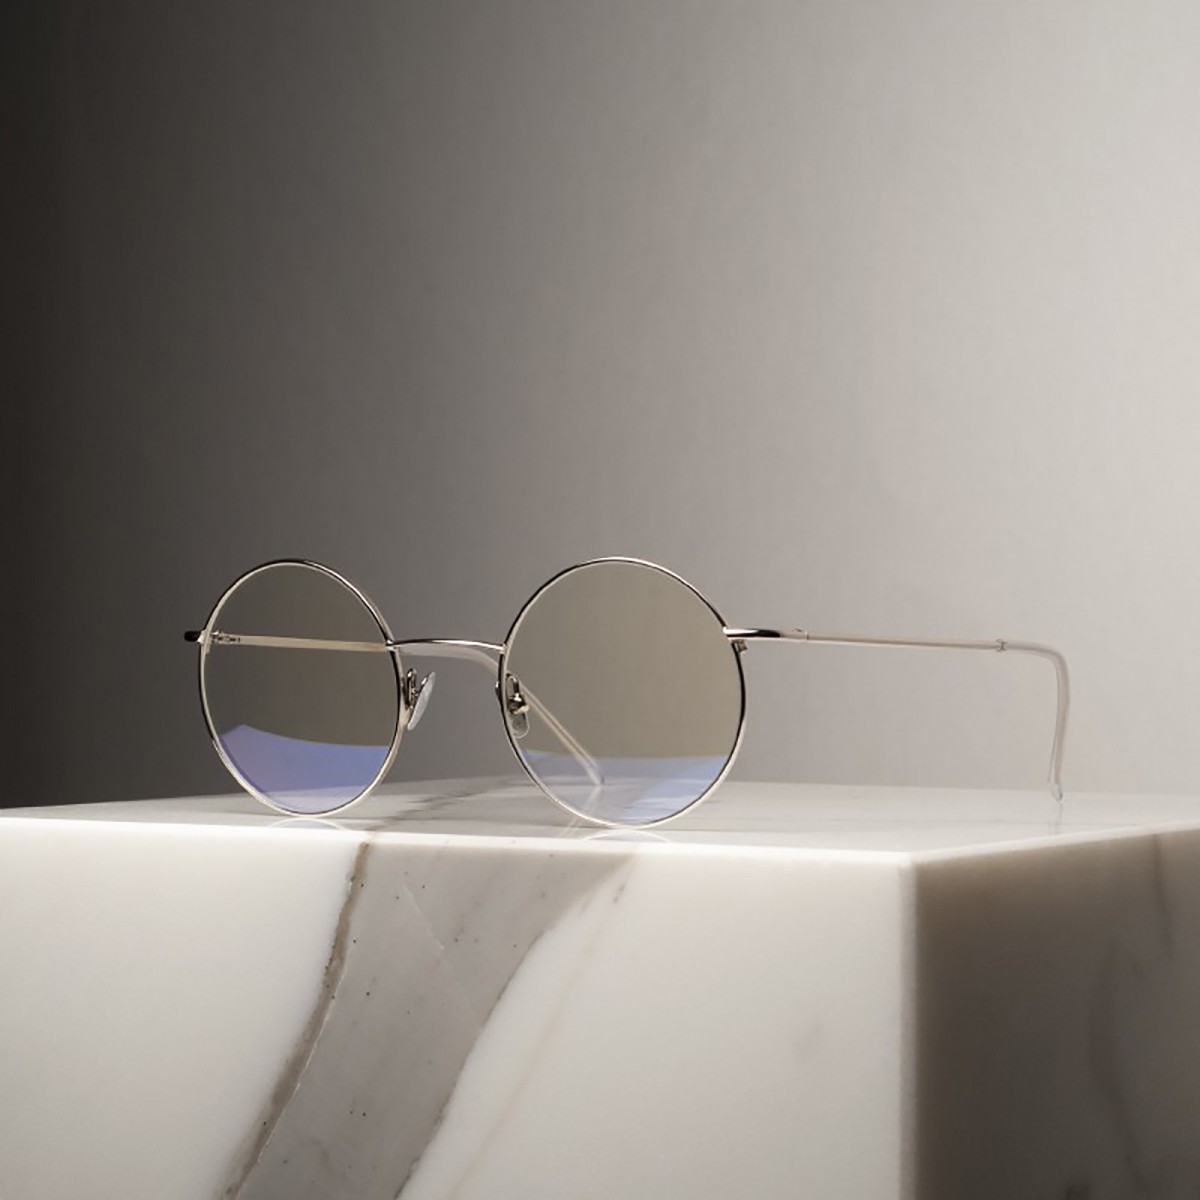 0098 - Metal glasses handmade in France